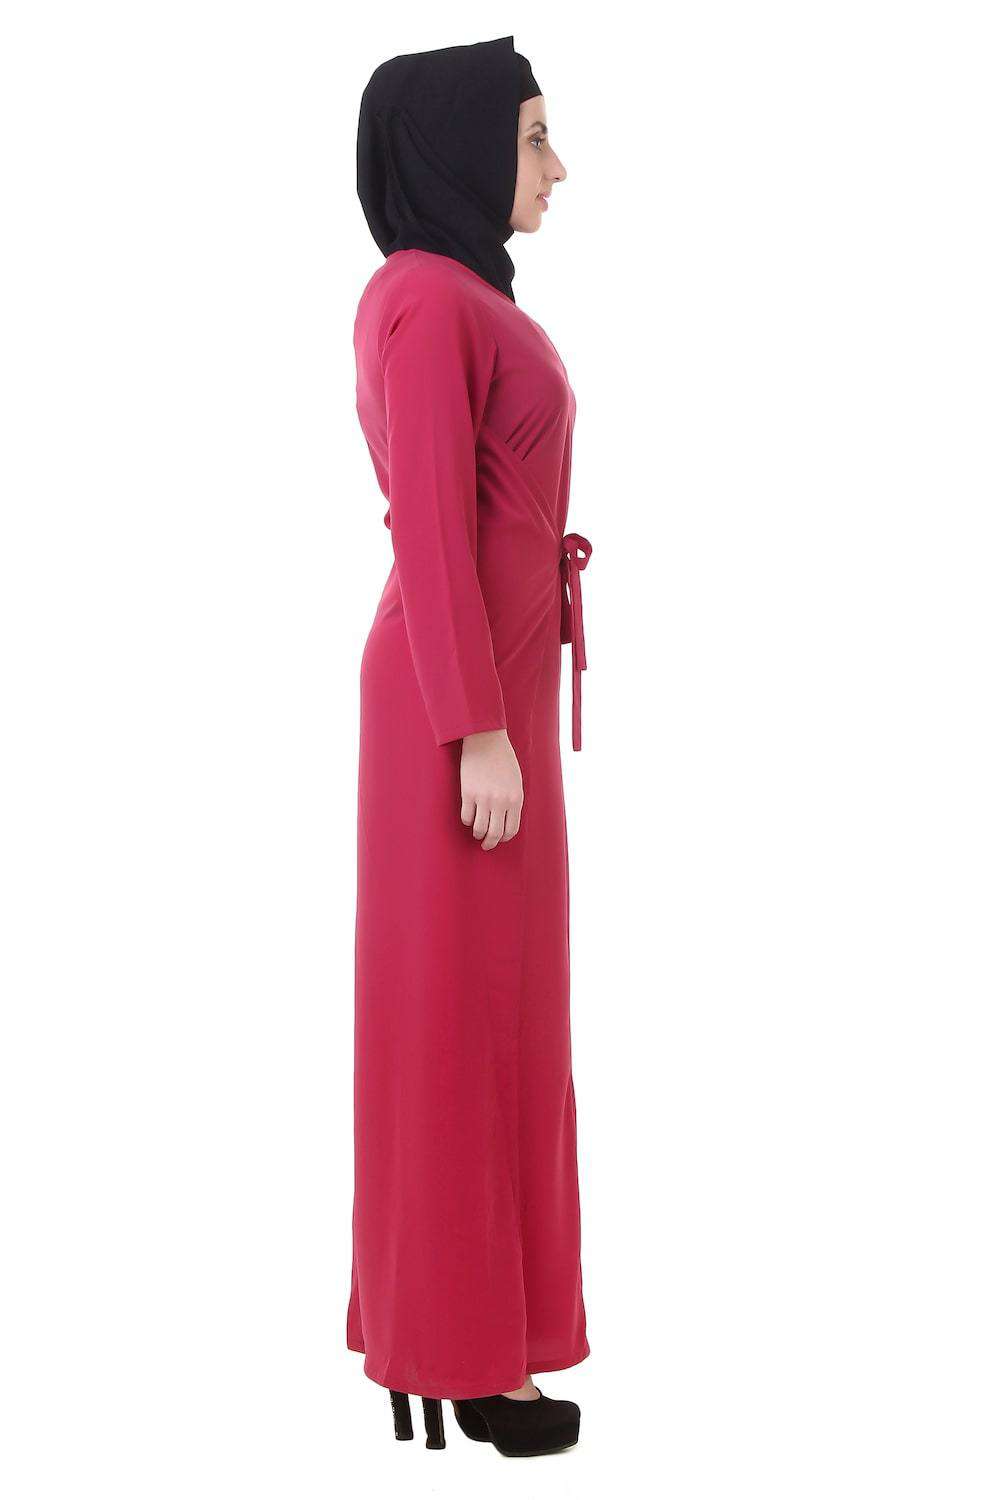 Rose Pink Occasion Wear Nida Abaya AY-703